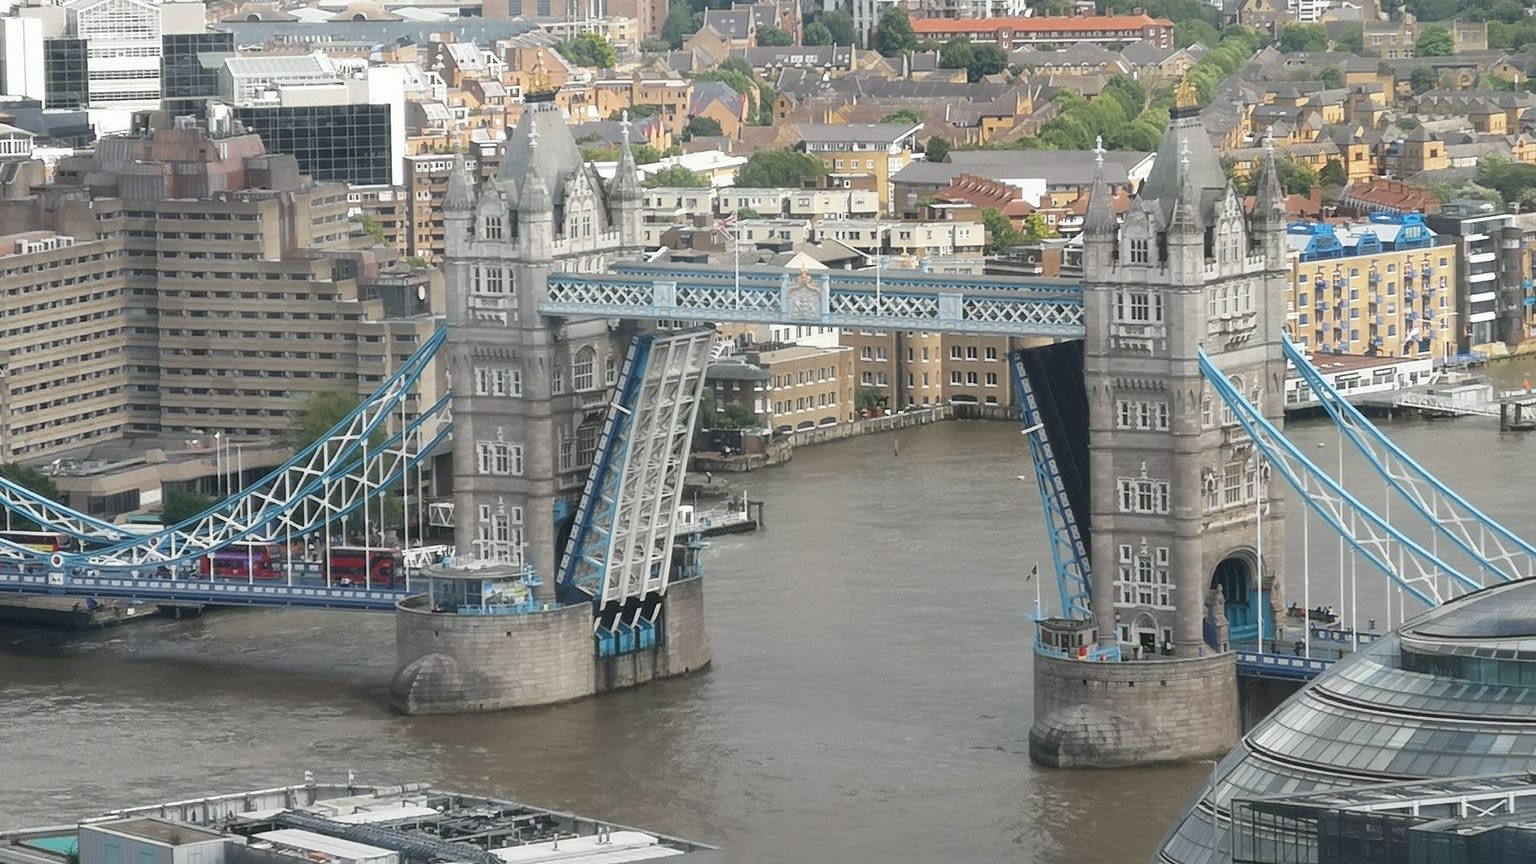 Technical fault leaves London's Tower Bridge stuck open  | ITV News